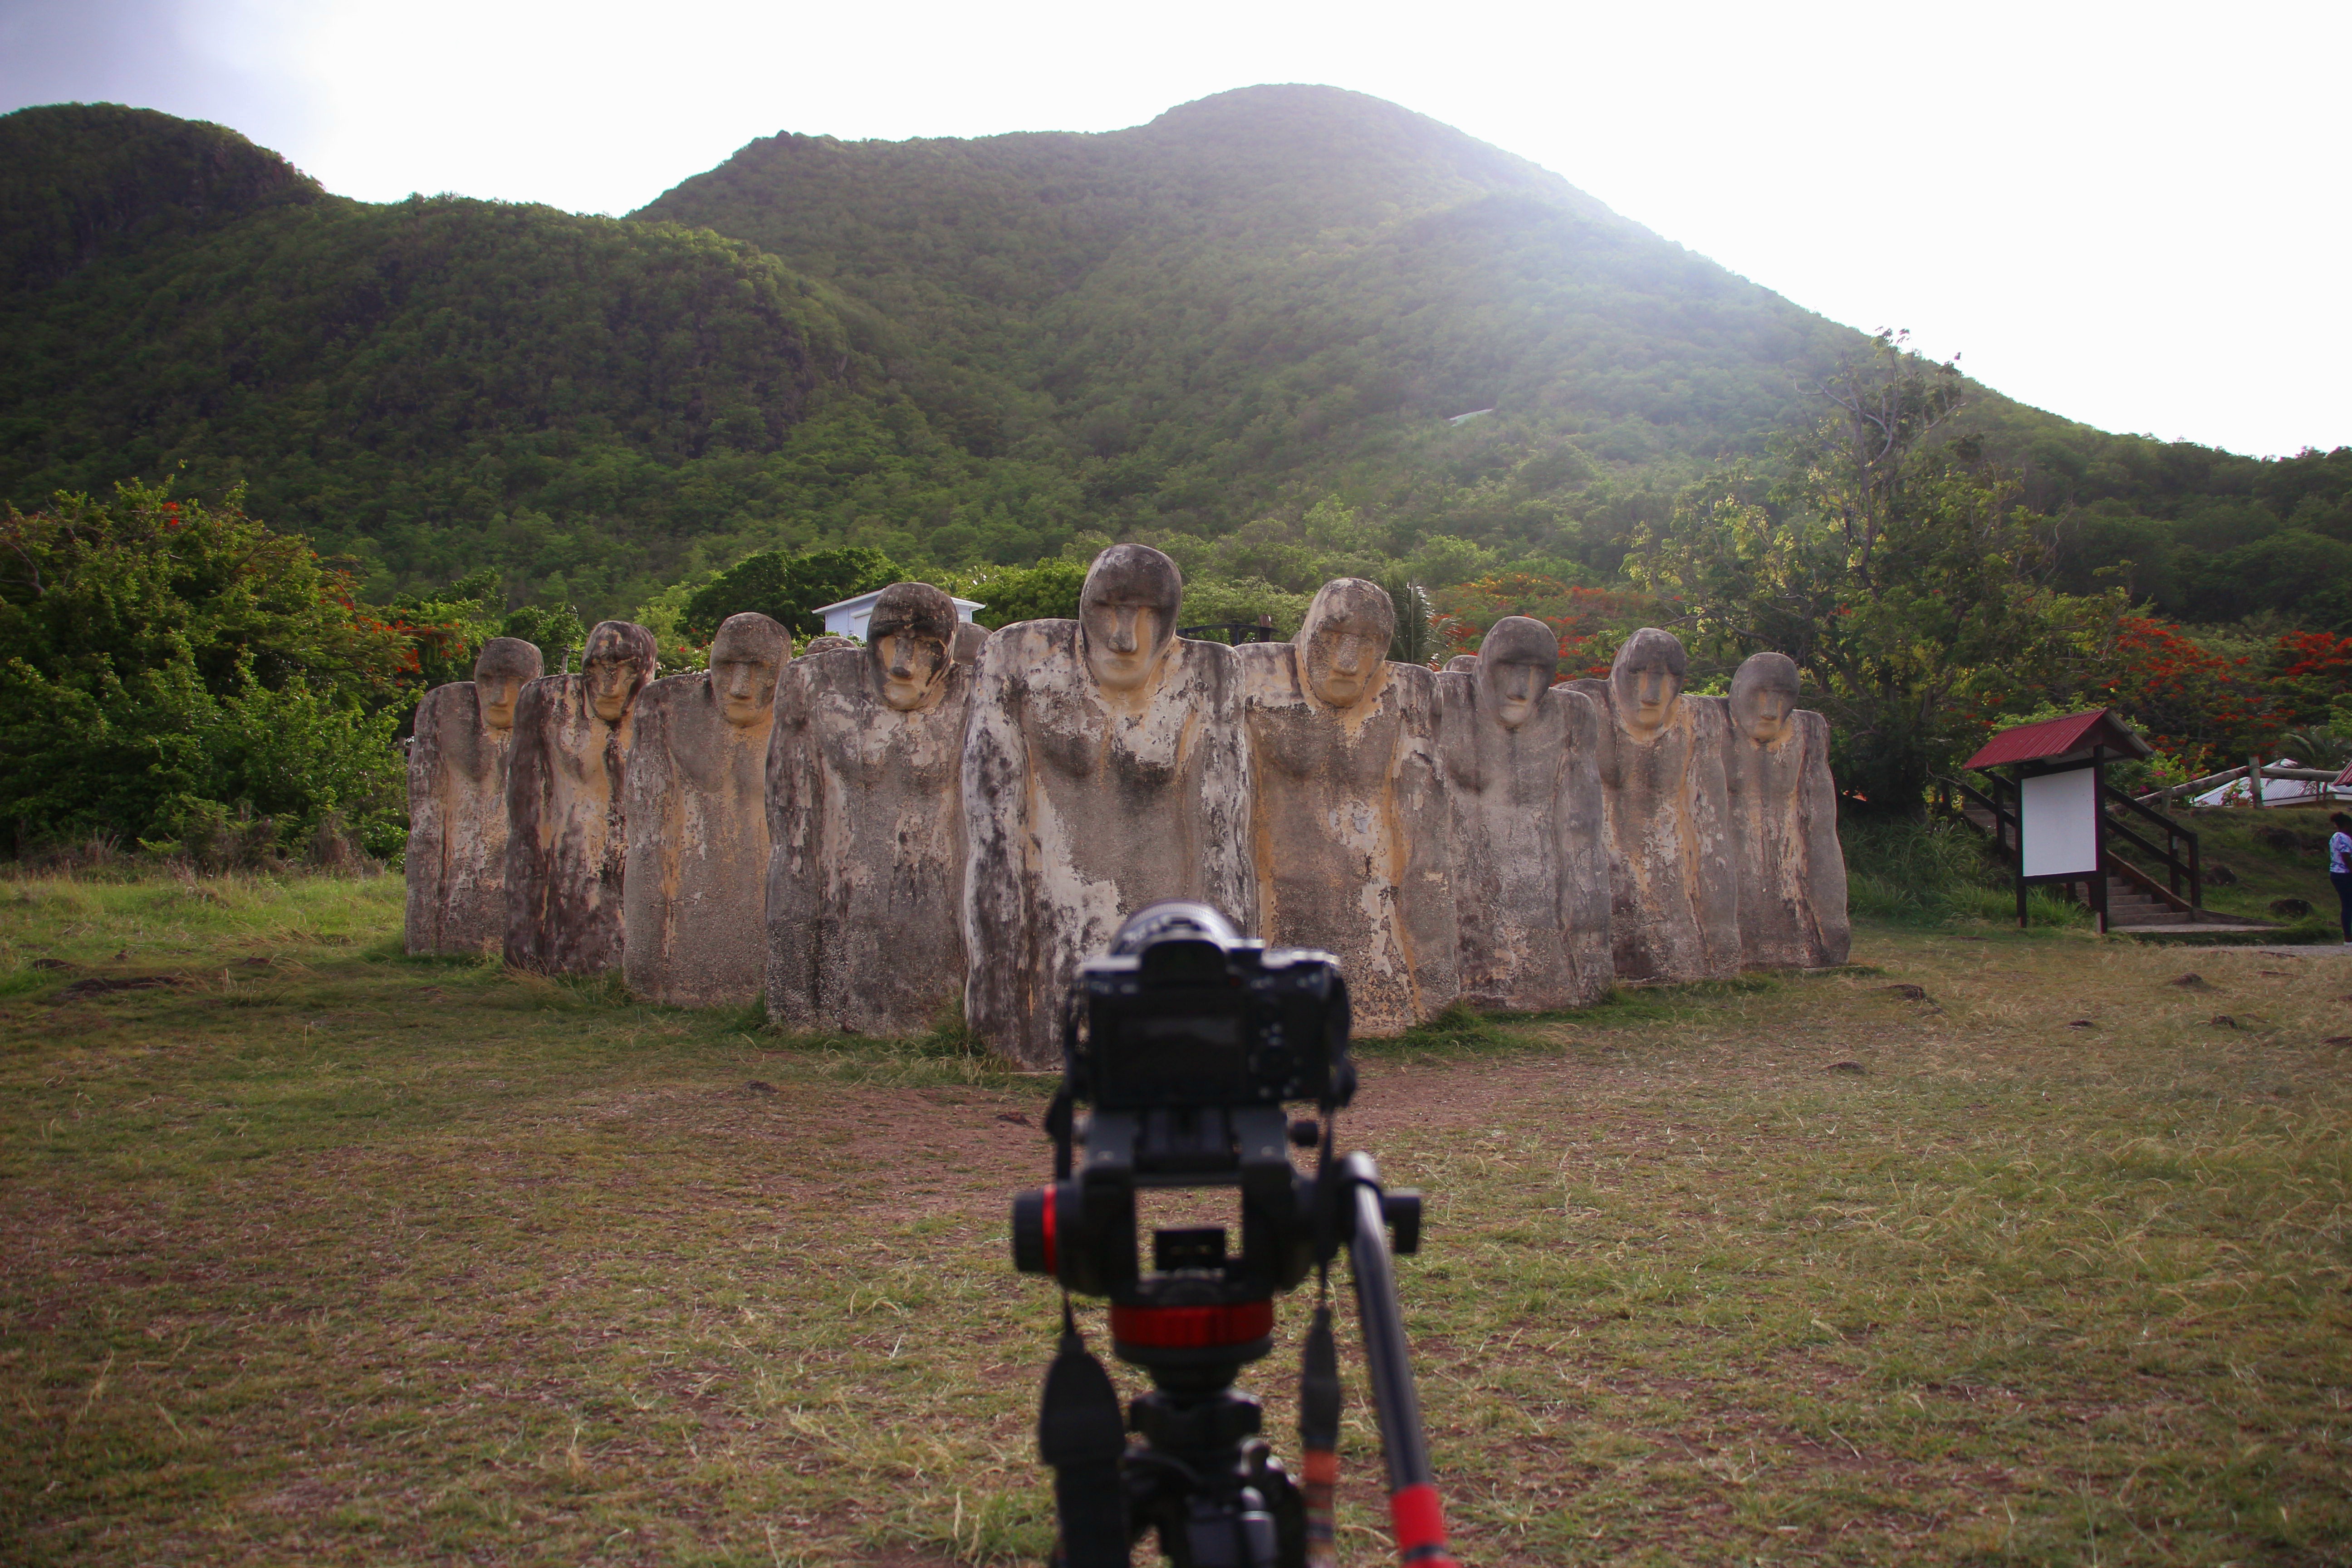 Video camera pointing toward an outdoor sculpture